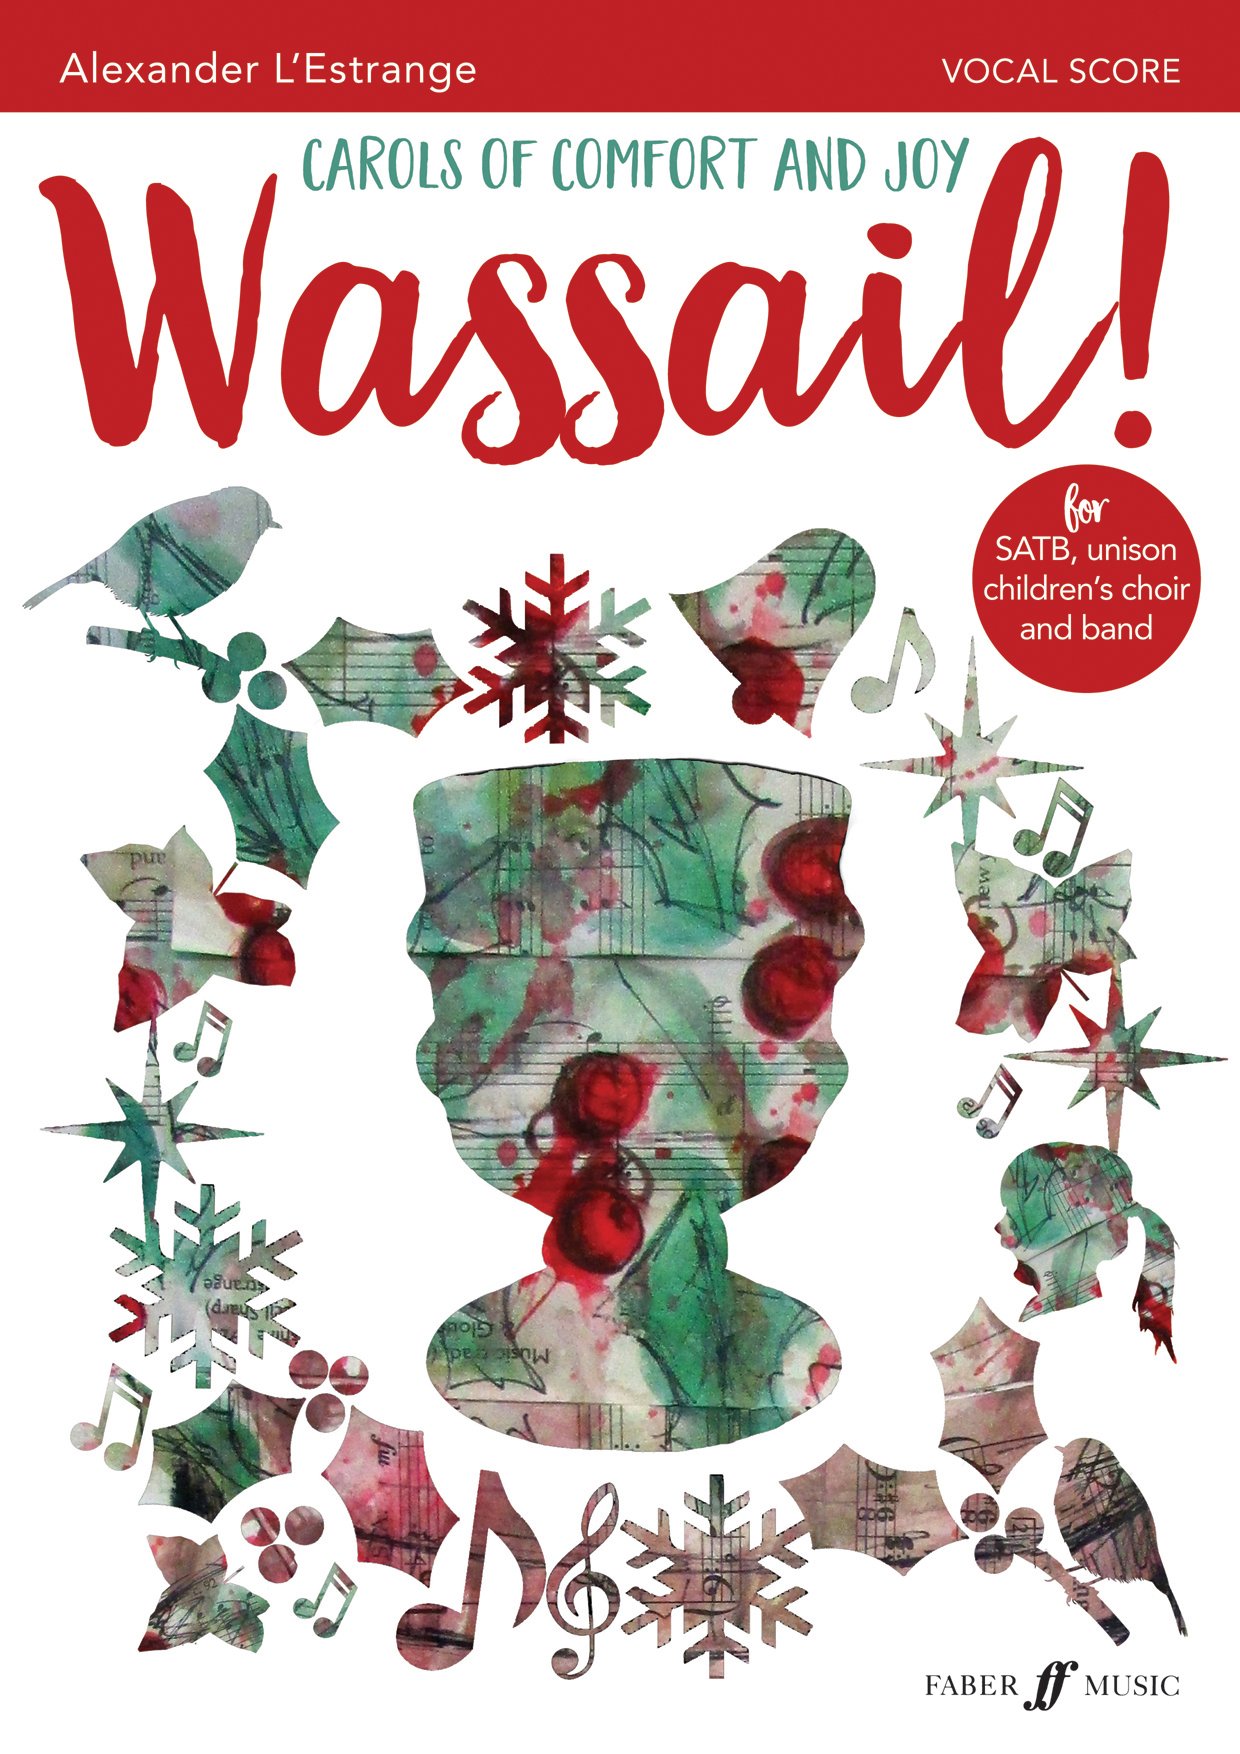 WASSAIL! Carols of Comfort and Joy